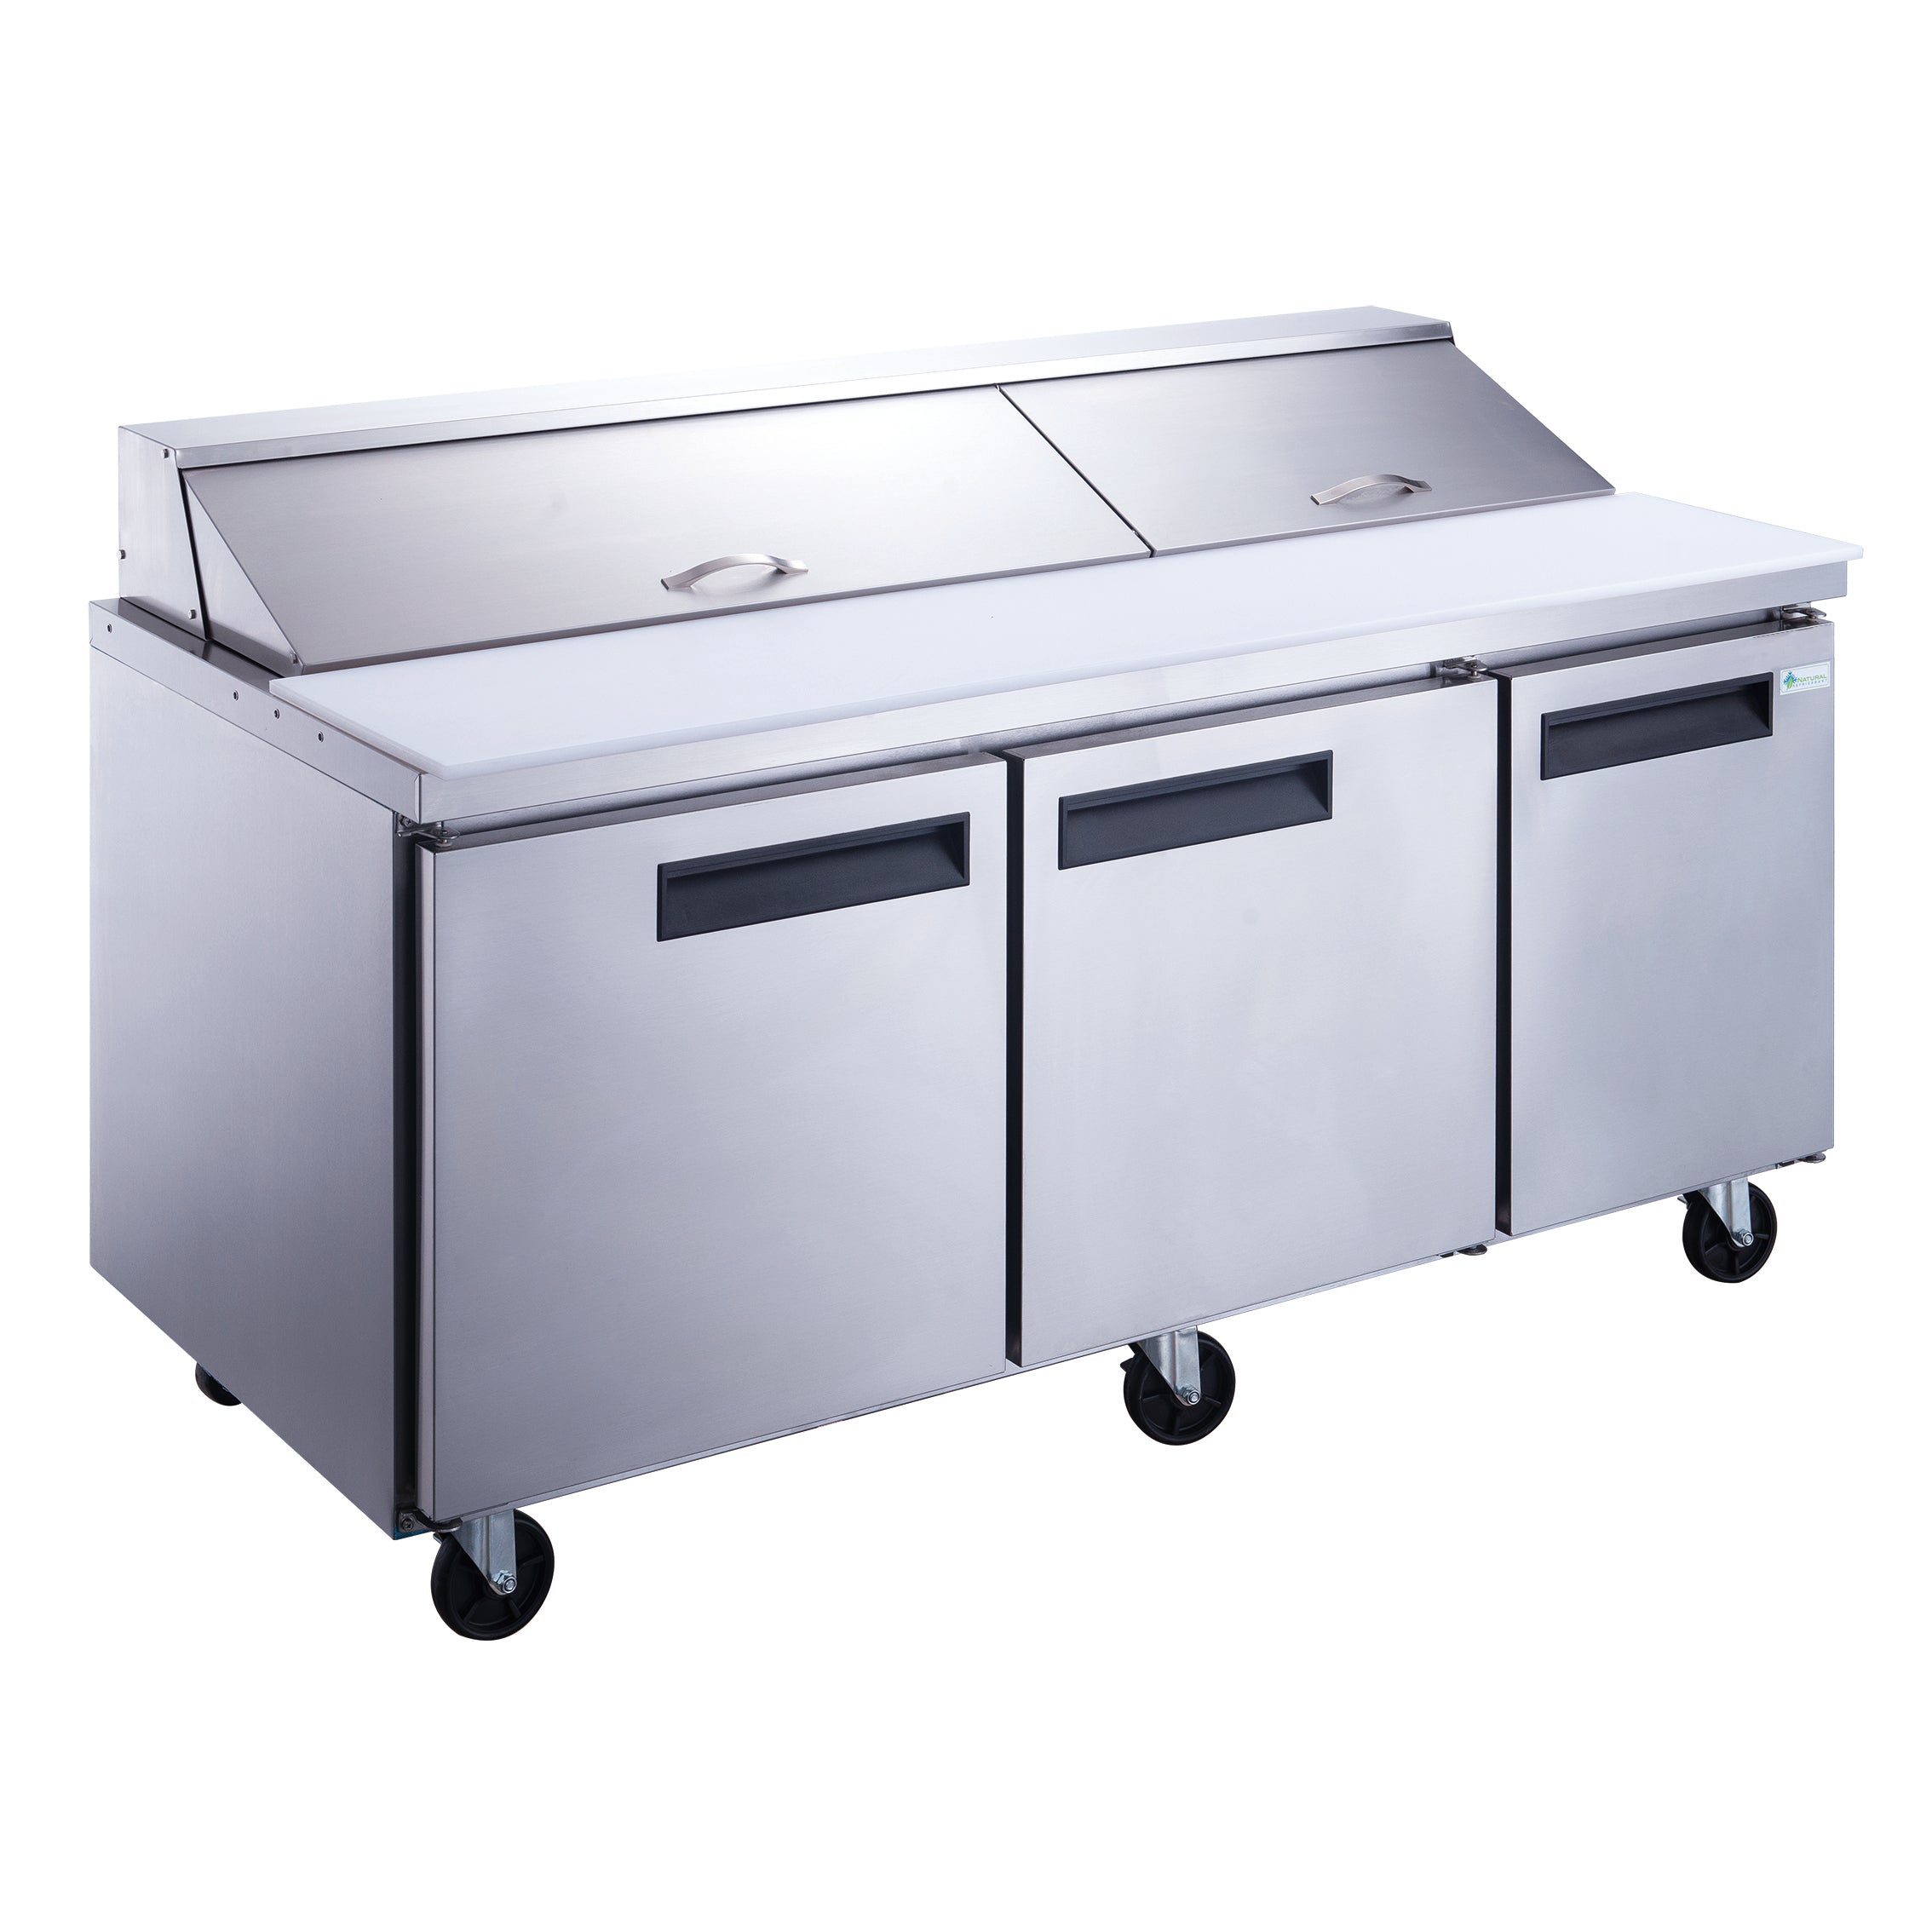 Chef AAA - DSP72-18-S3 3-Door Commercial Food Prep Table Refrigerator in Stainless Steel